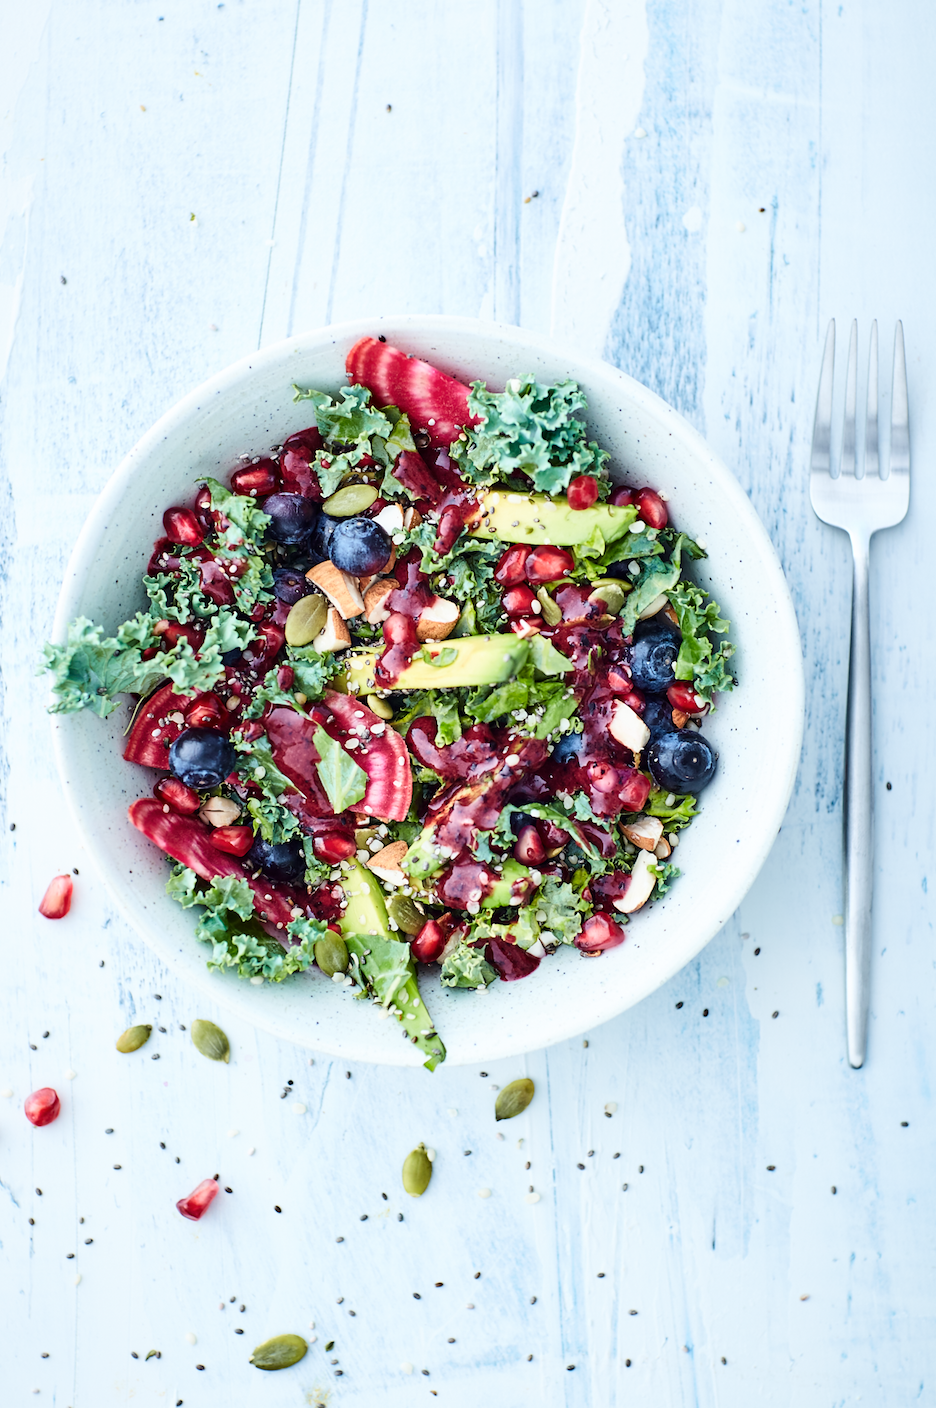 Superfood salad with blueberry-ginger vinaigrette